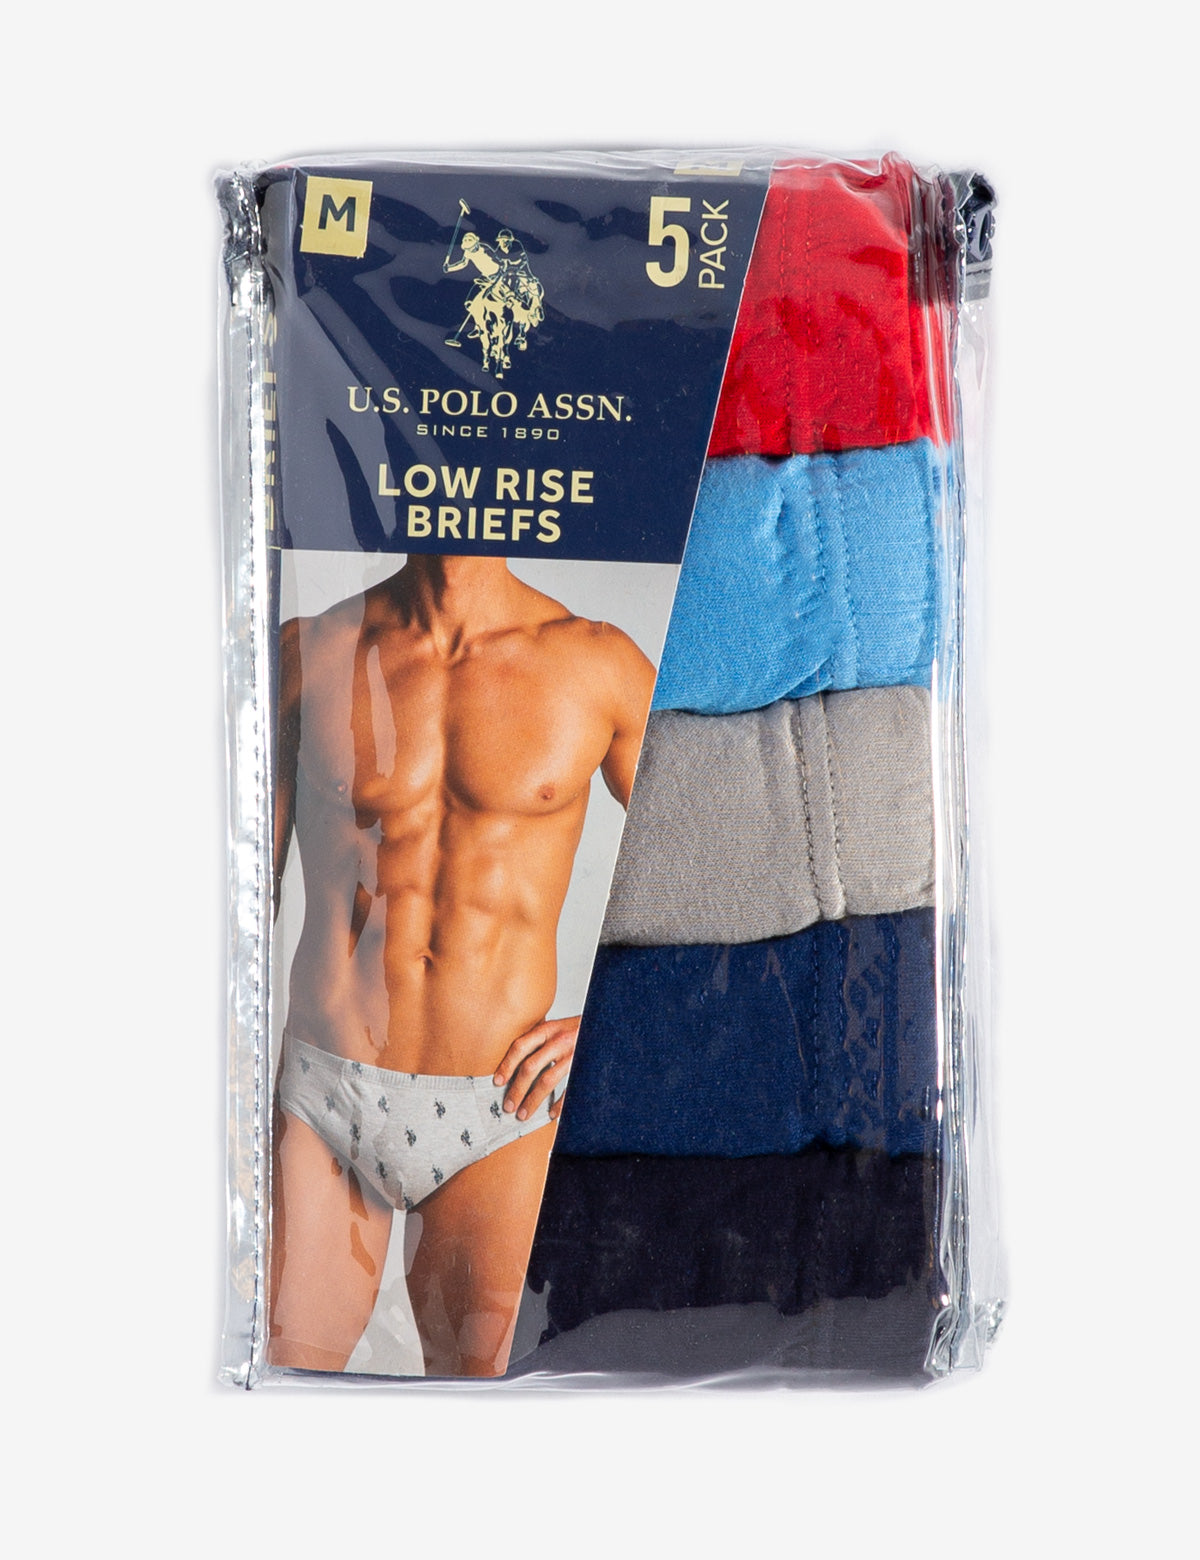 U.S. POLO ASSN. Men's Underwear 4 Pack Stretch Boxer Briefs 